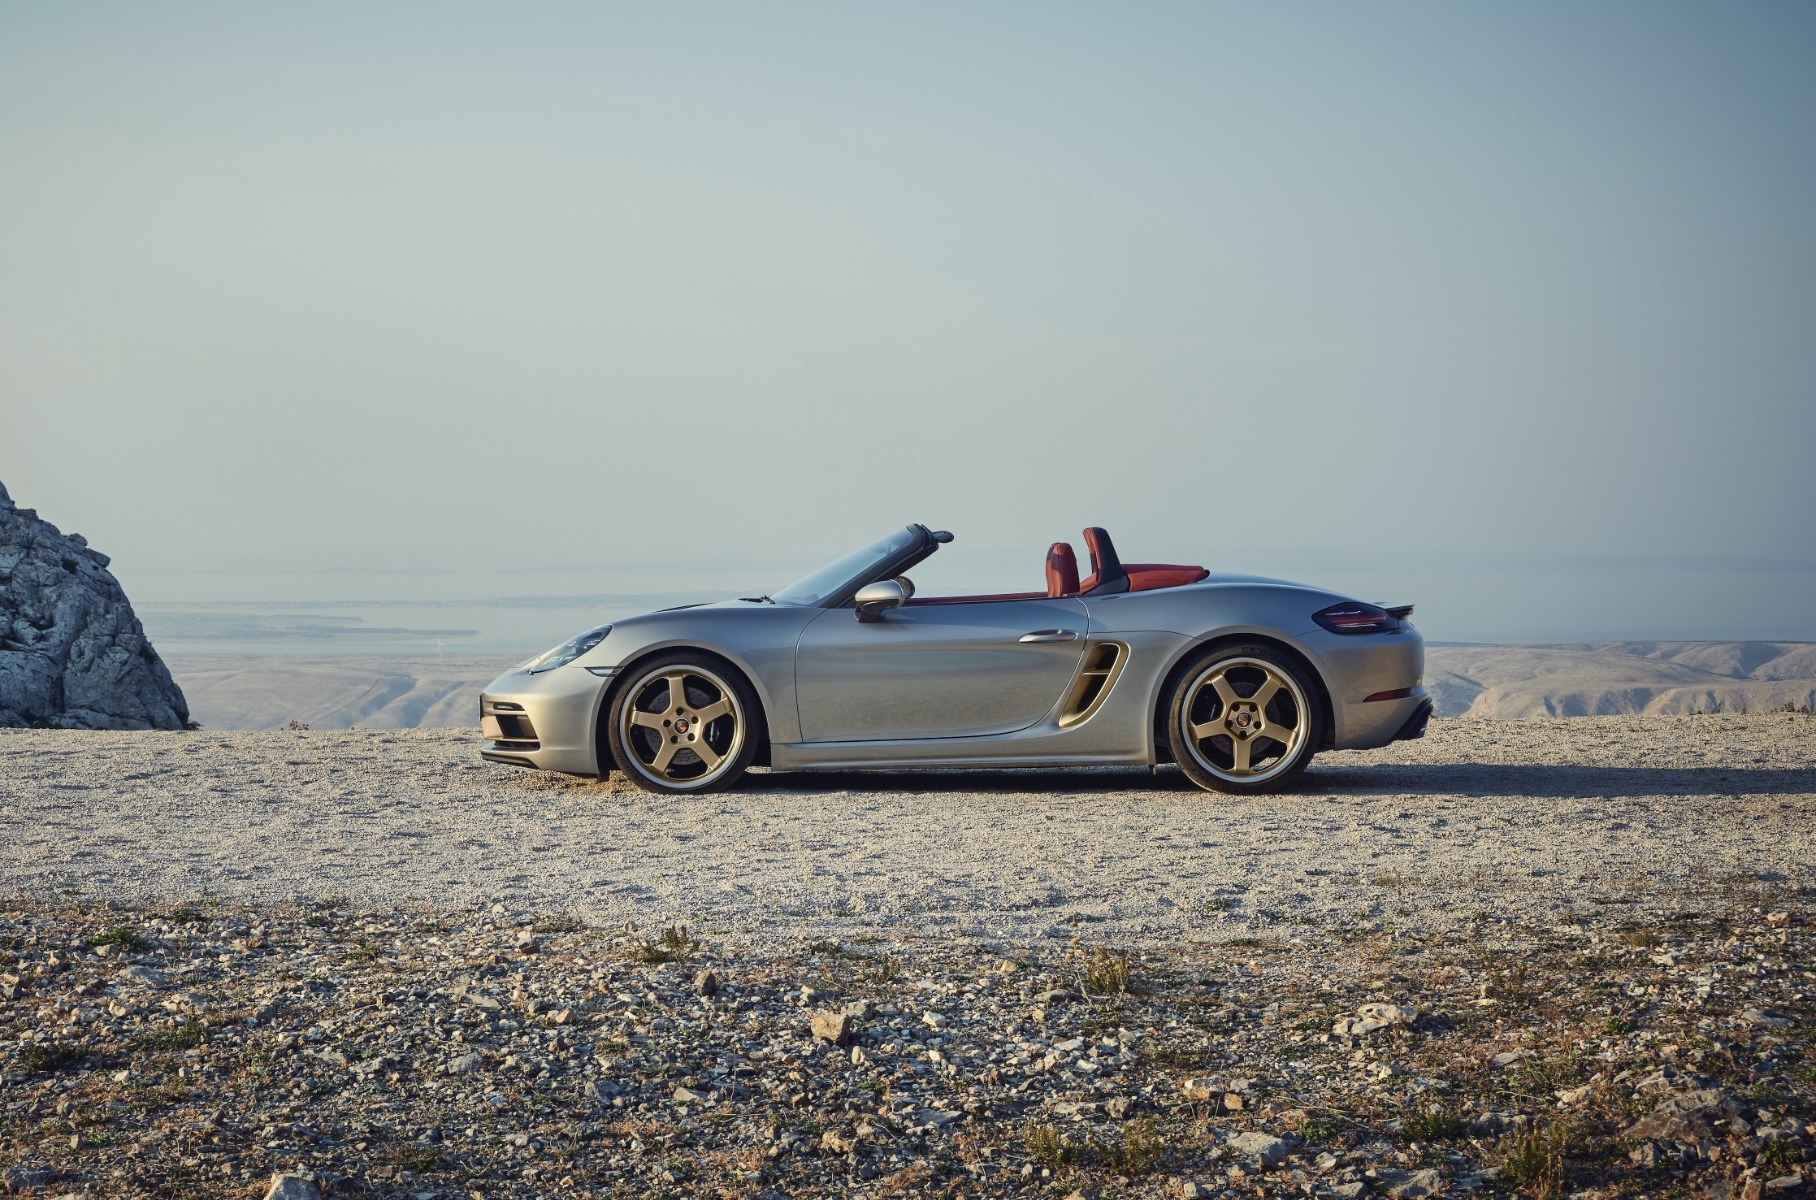 Porsche Boxster 25 Years отпразднует 25-летие модели